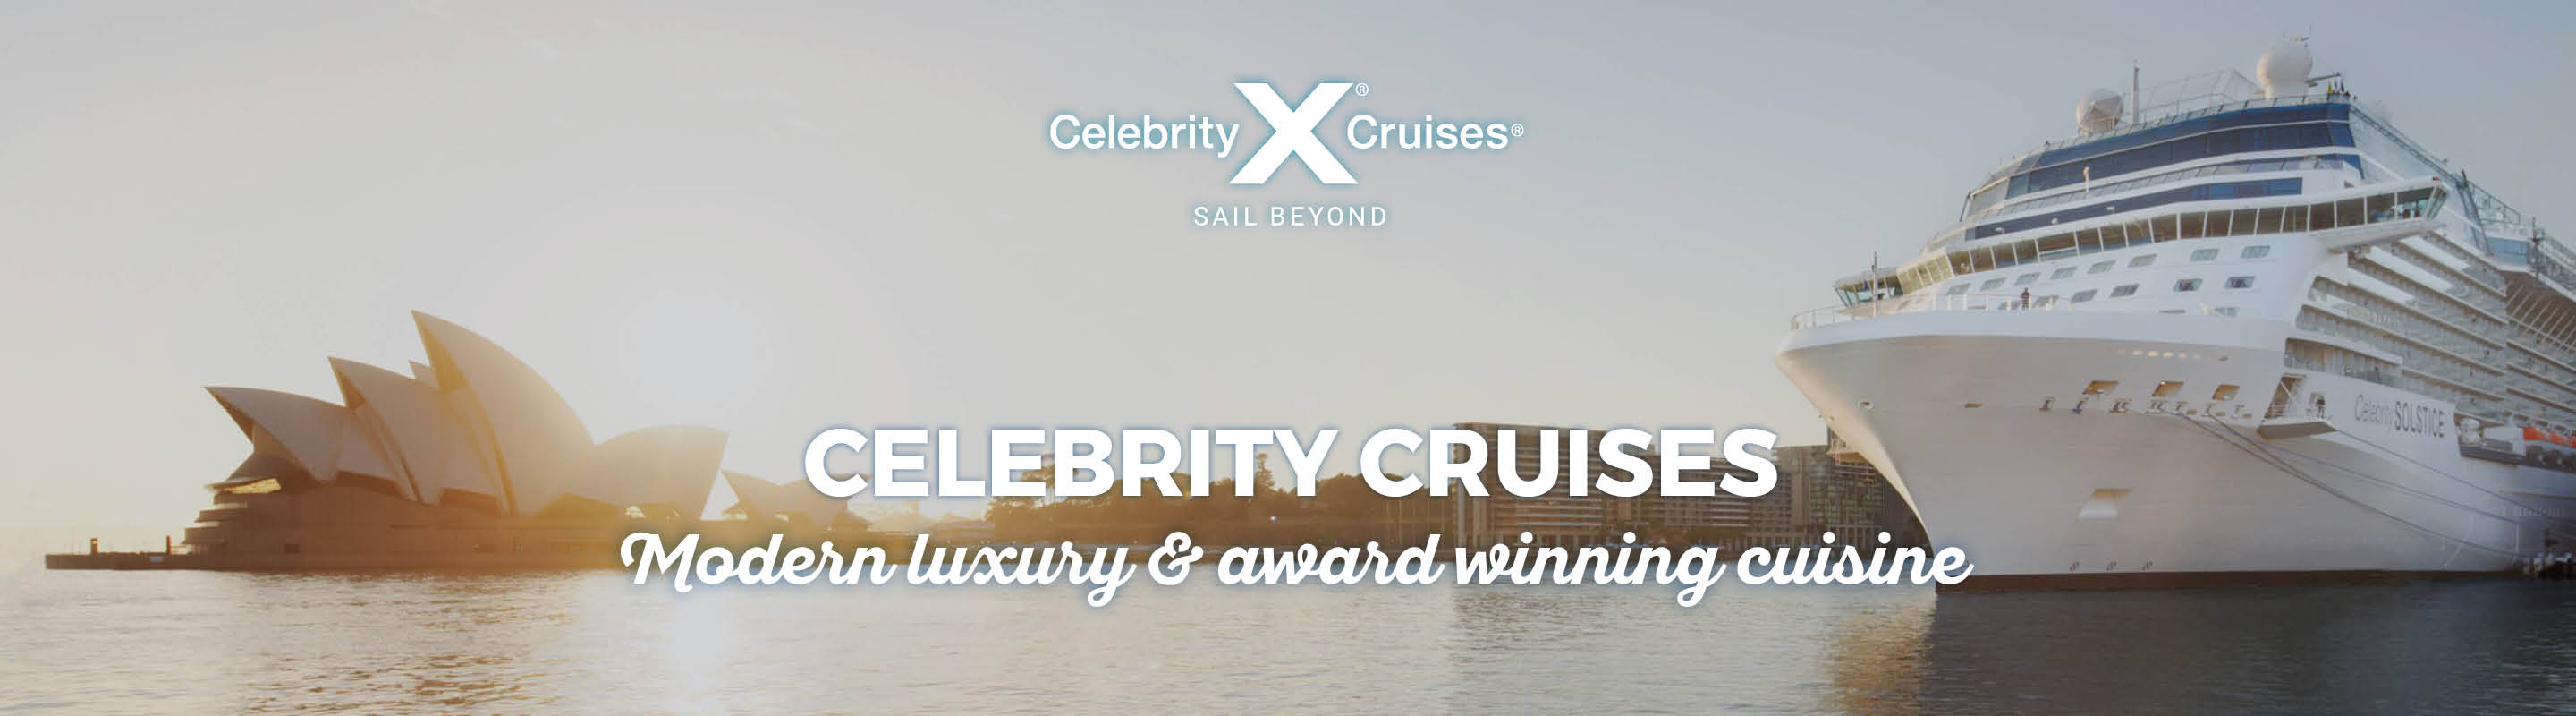 celebrity-cruise-offers.jpg